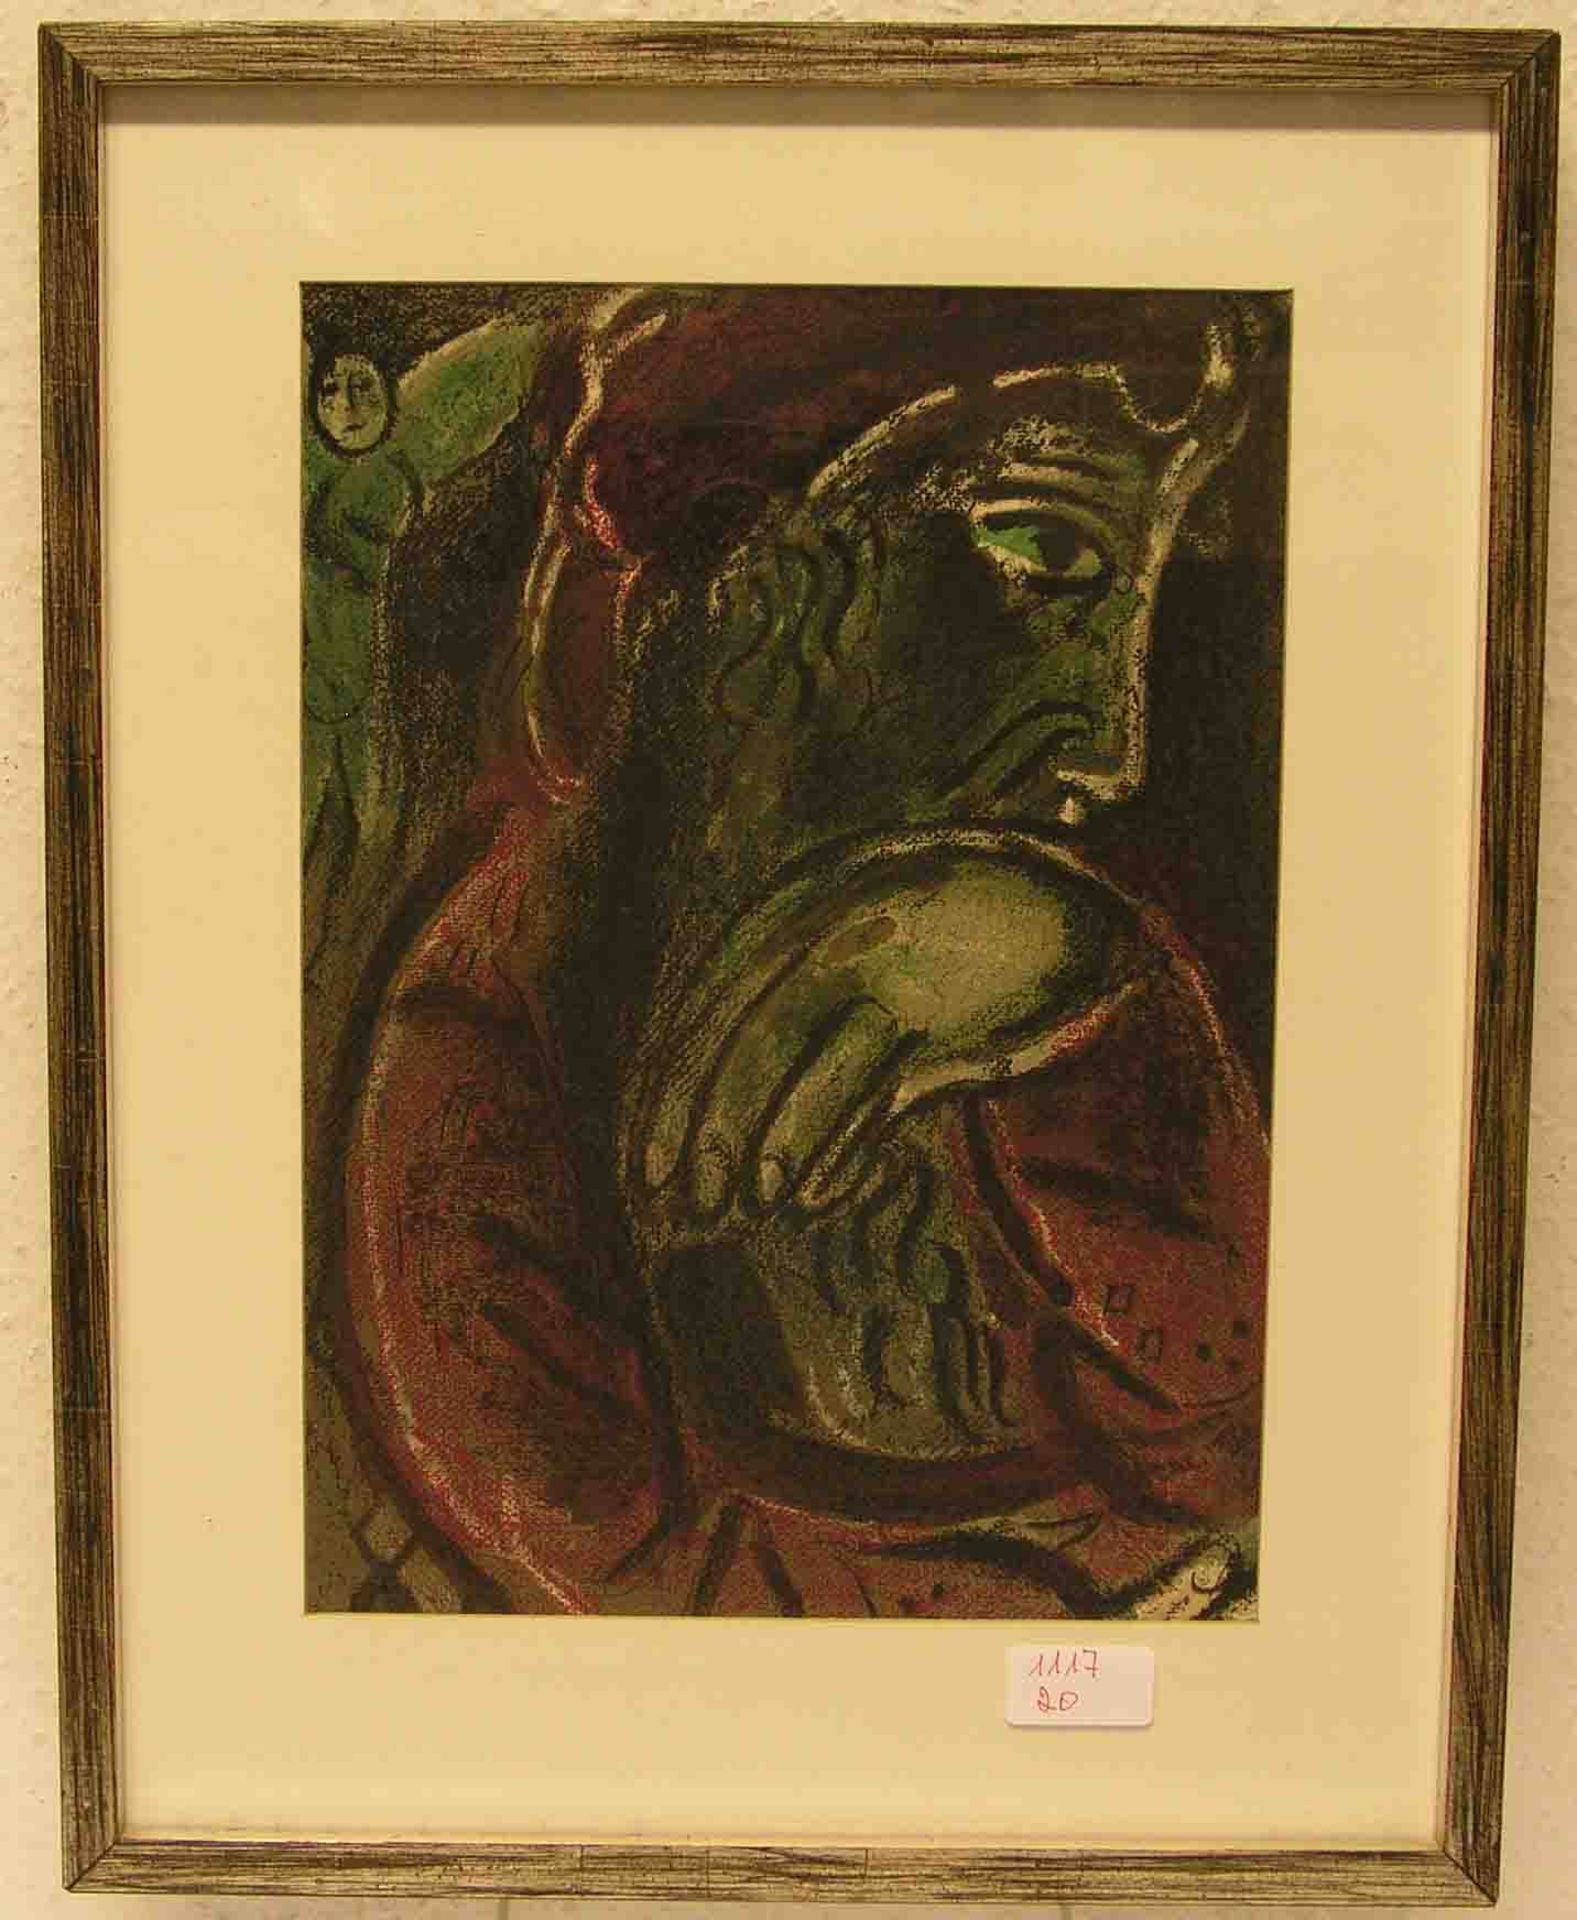 Chagall, Marc: "Hiob". Illustration aus der Bibel. Farblithografie, 1960, Mourlot 254, 34x 24cm.